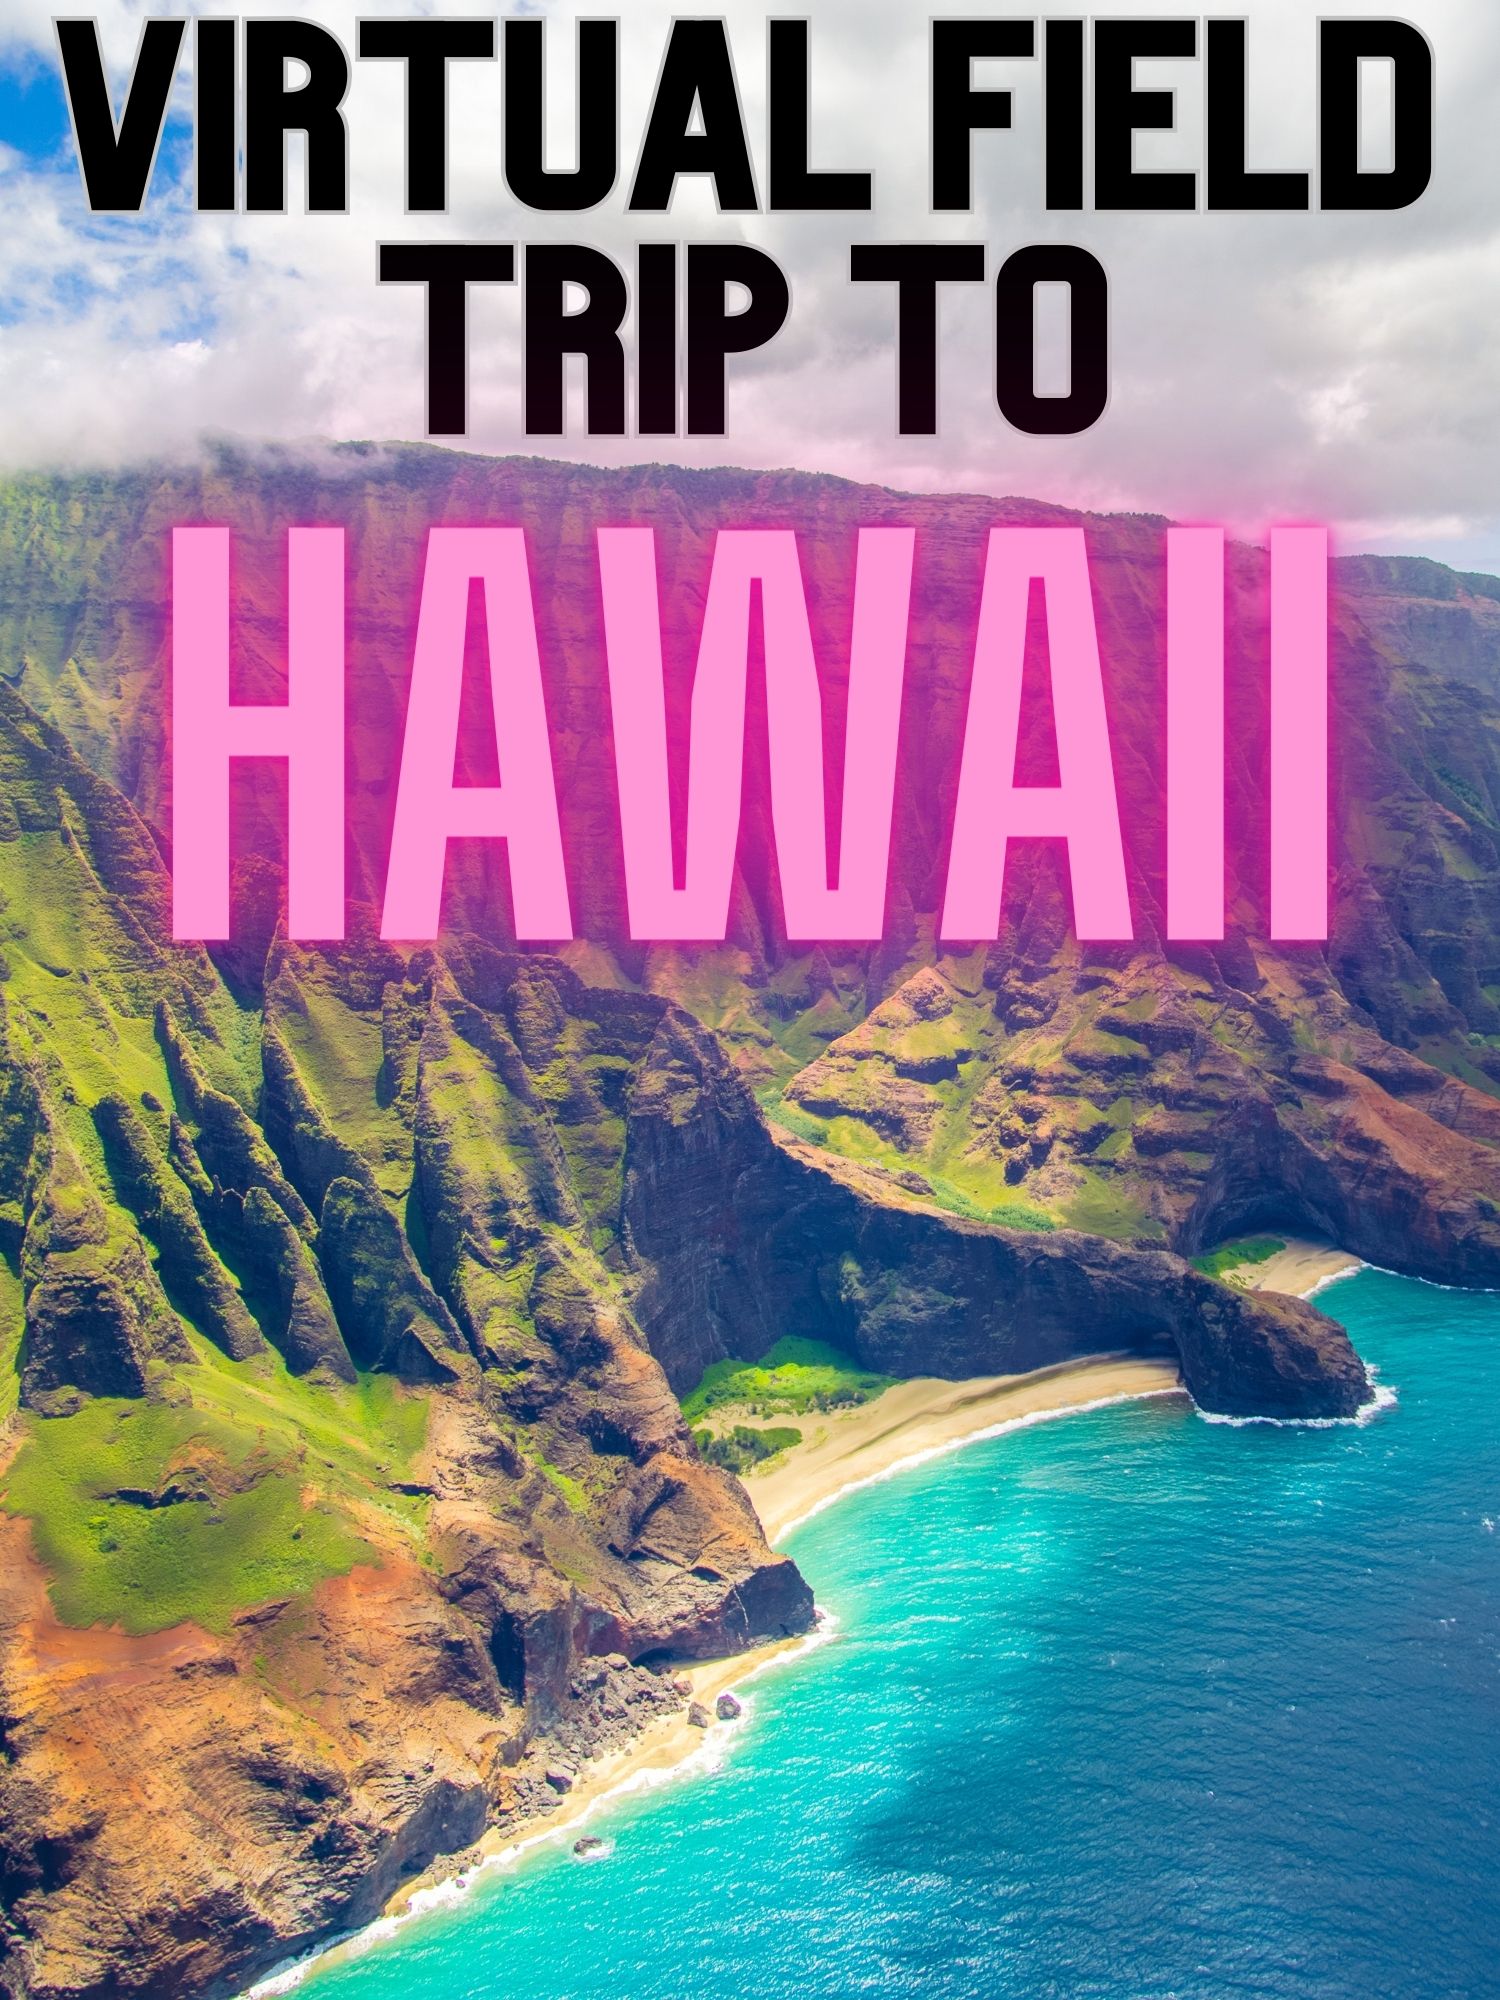 virtual field trip to Hawaii